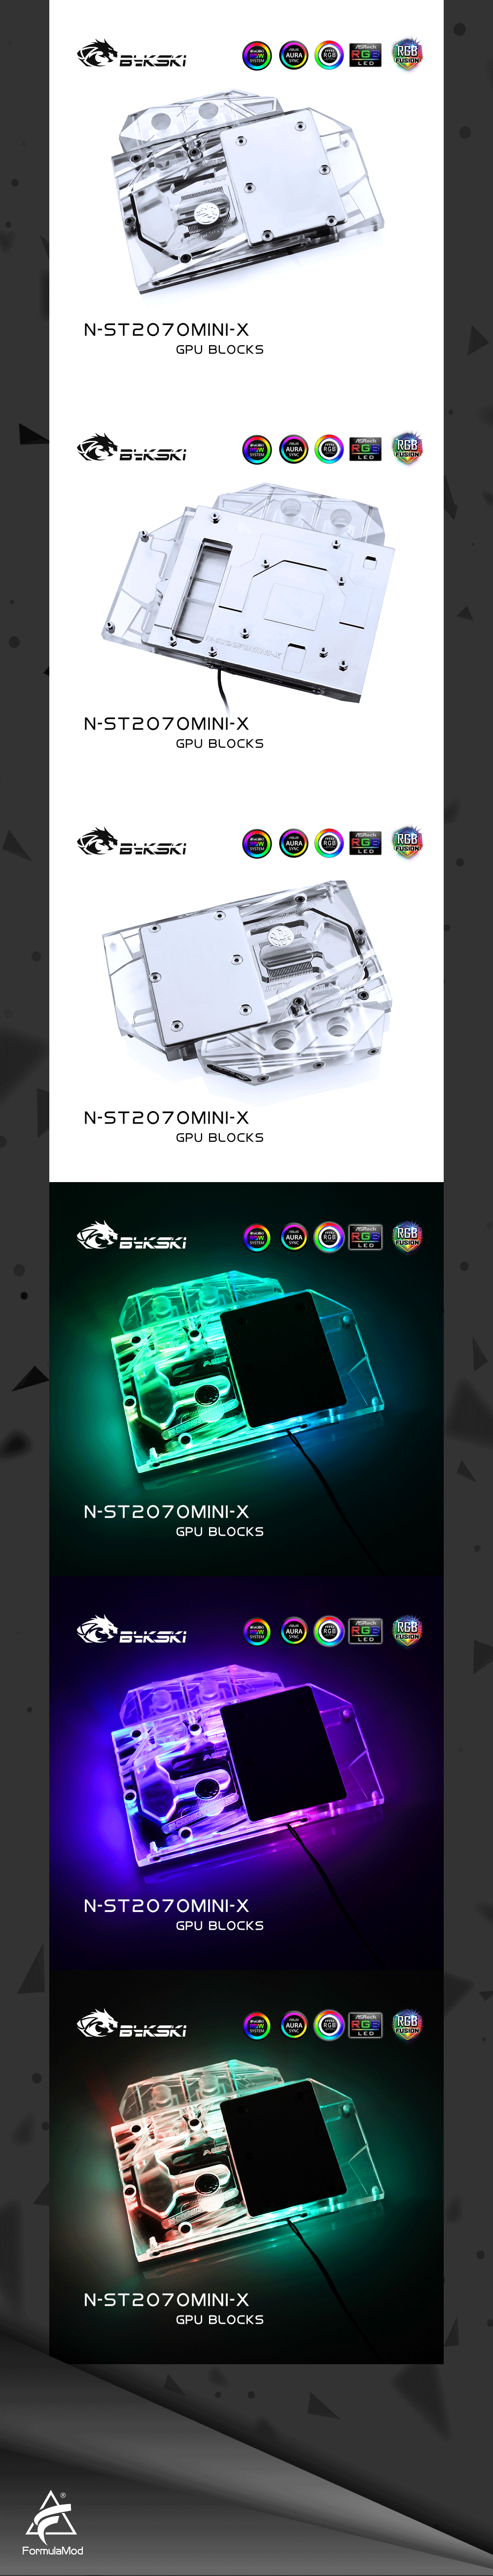 Bykski Full Cover Graphics Card Water Cooling Block, For Zotac RTX 2060/2070Super/2070 MINI/Gaming Twin Fan, N-ST2070MINI-X  